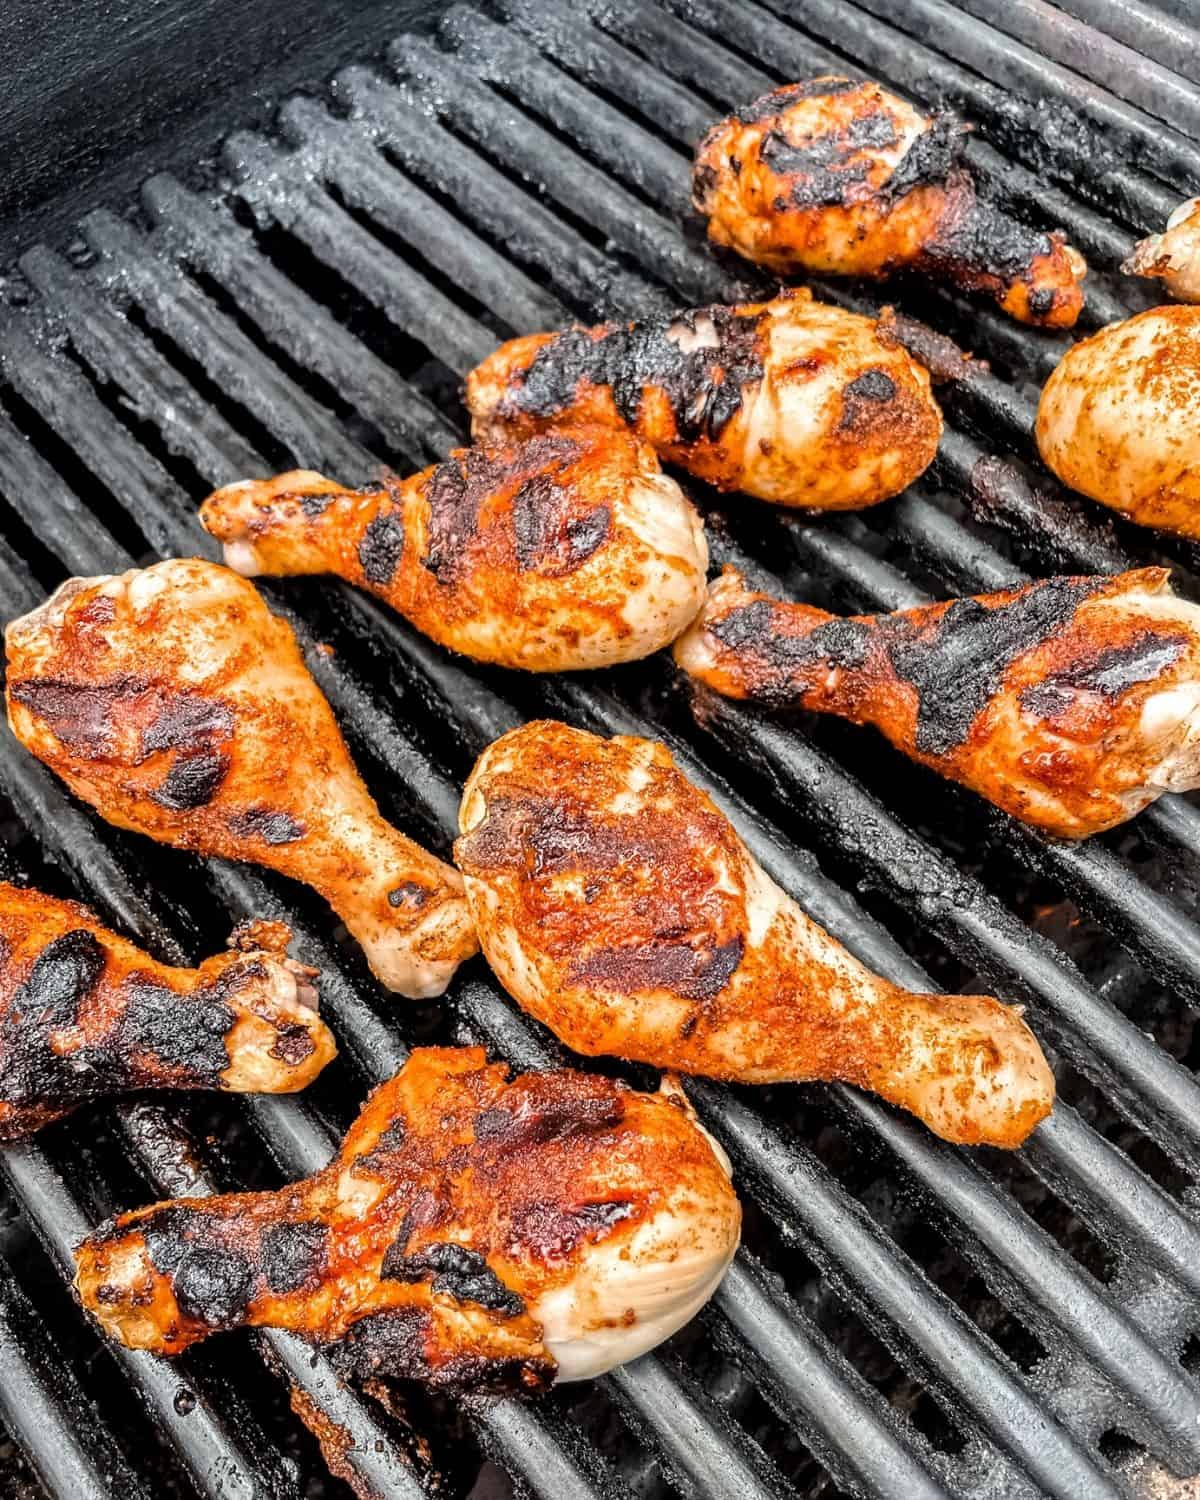 BBQ chicken drumsticks on the grill.